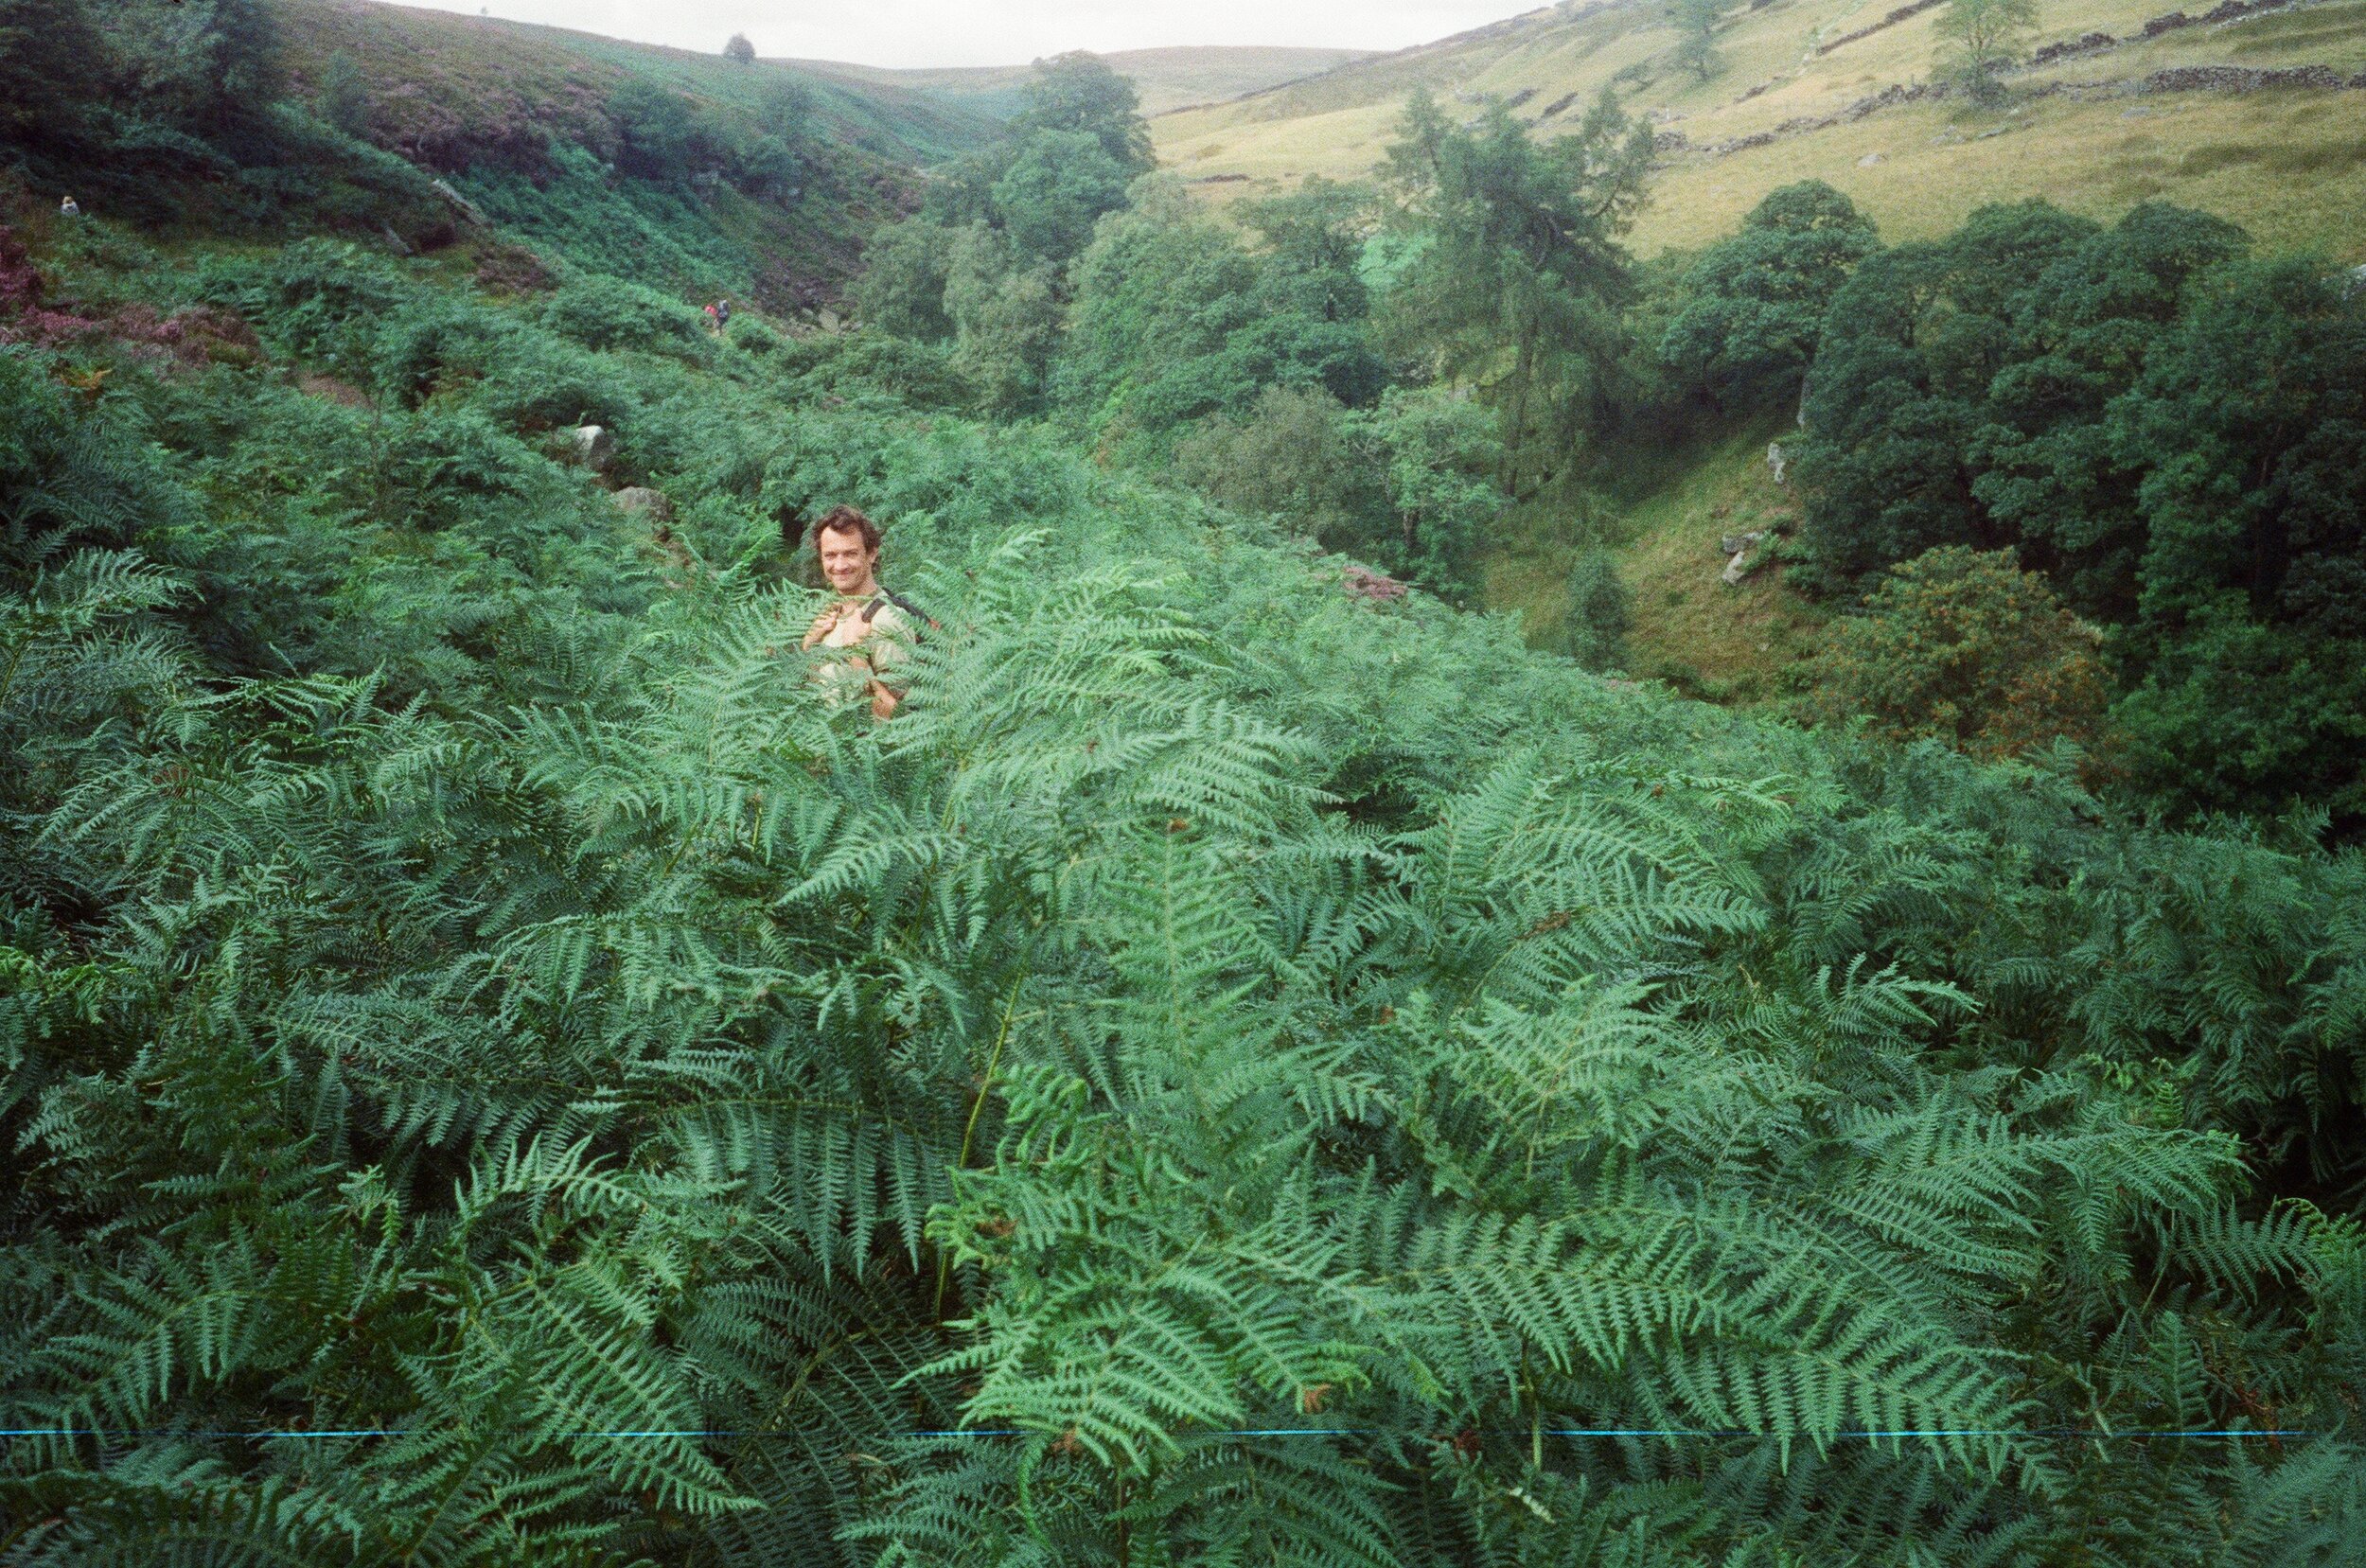 James in ferns, Yorkshire